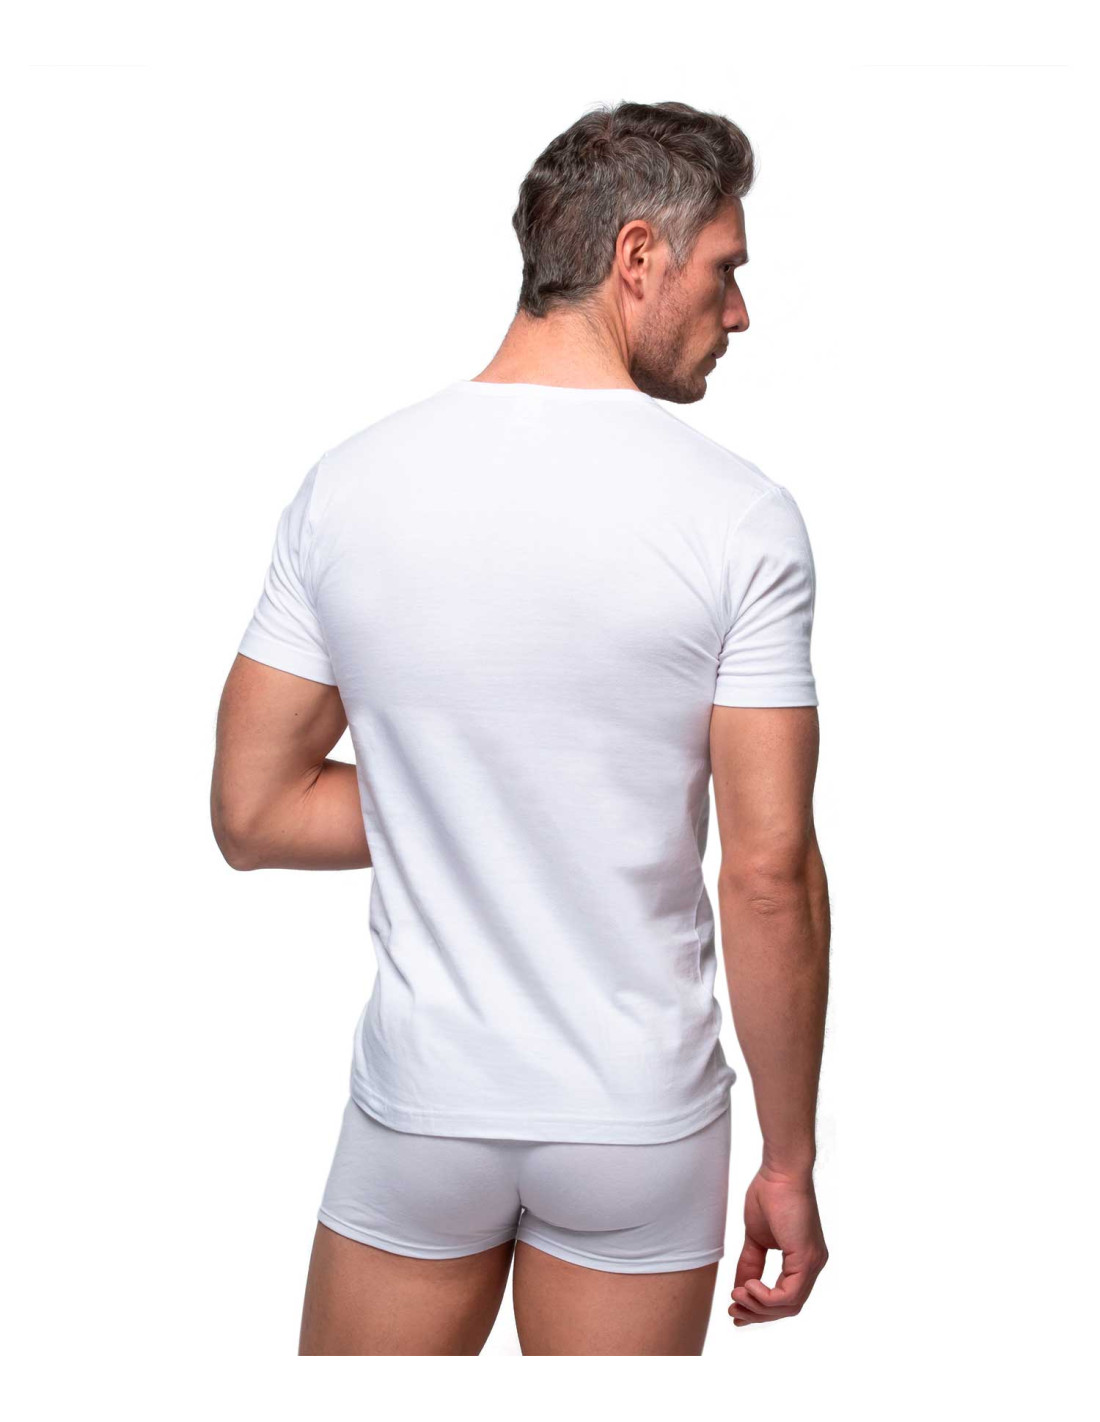 Camiseta interior hombre pico manga larga - Comodidad - Interior afelpado